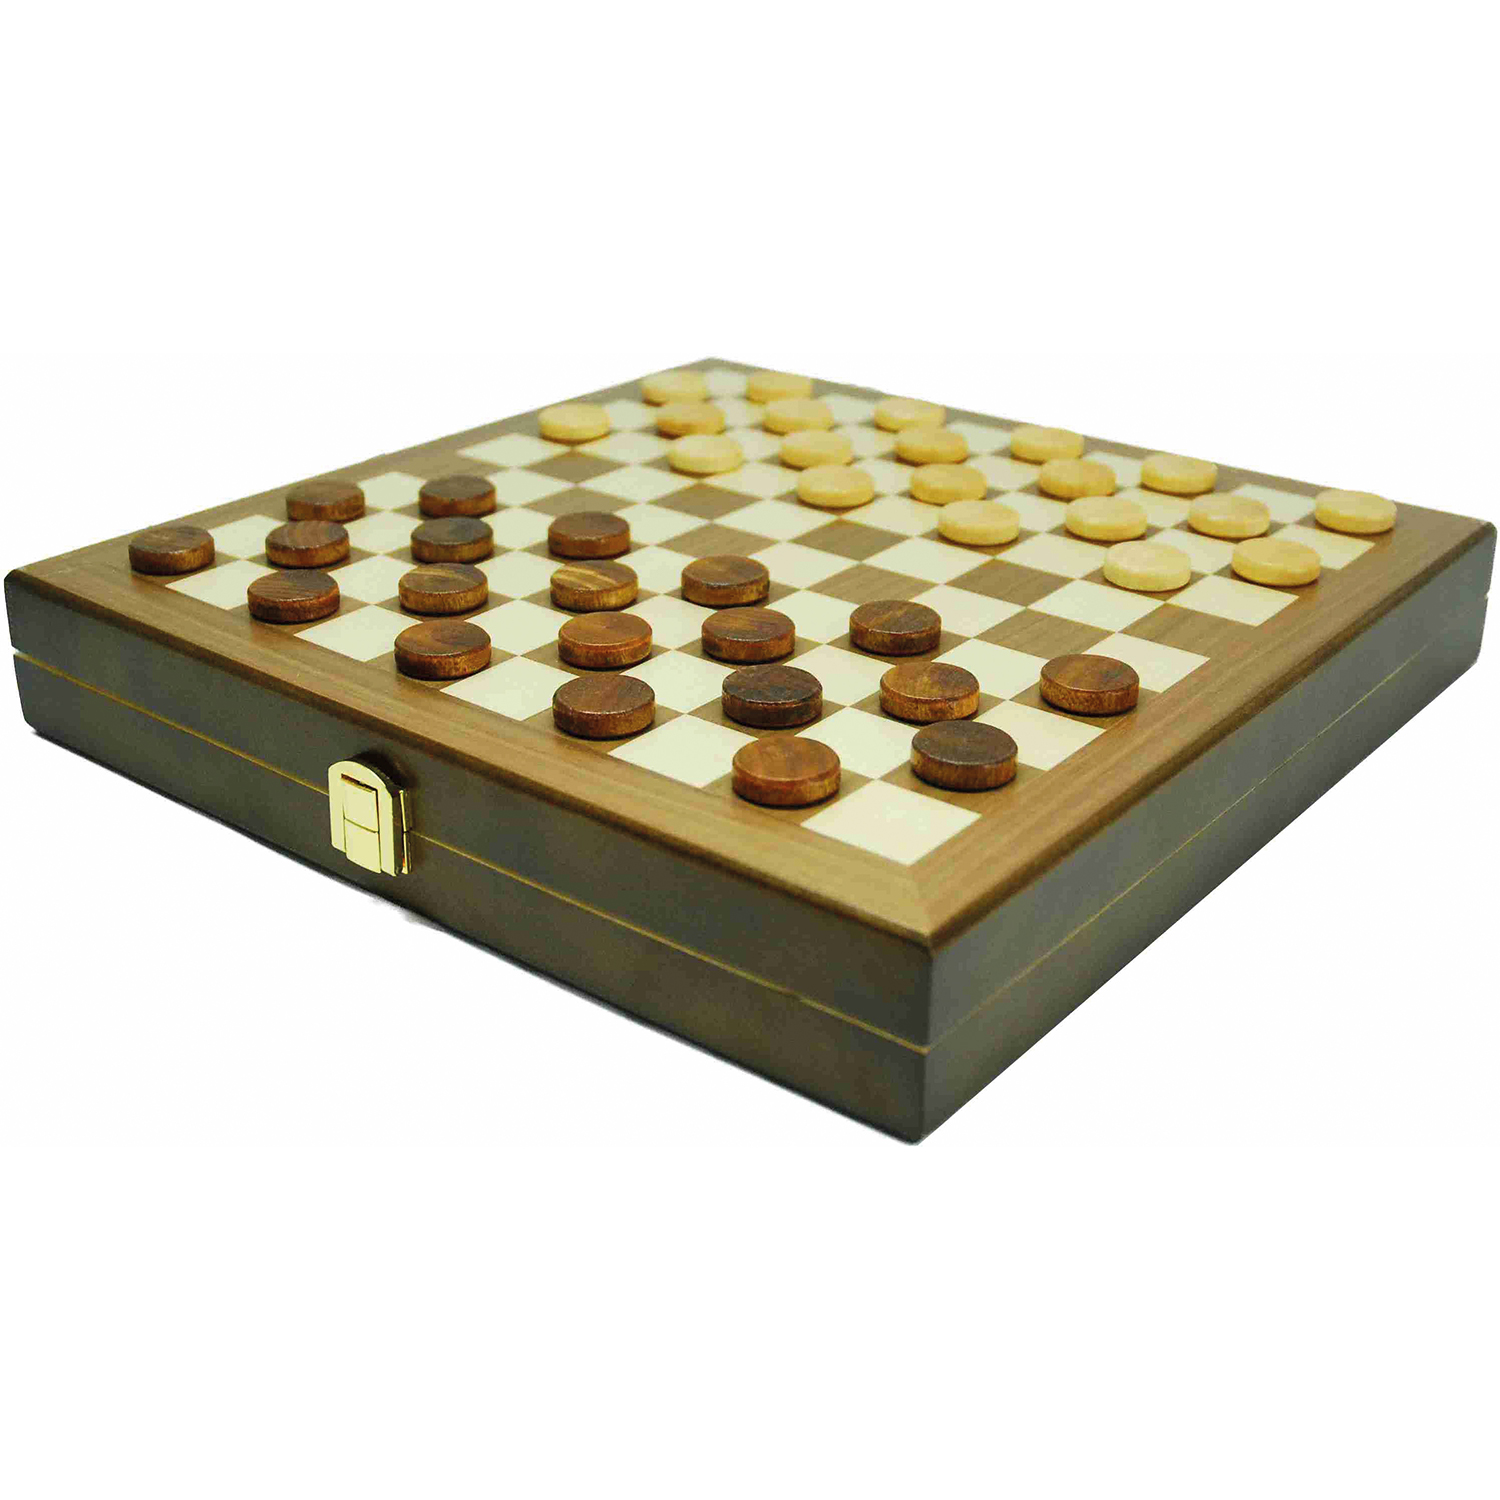 Buffalo chess, checkers and backgammon set